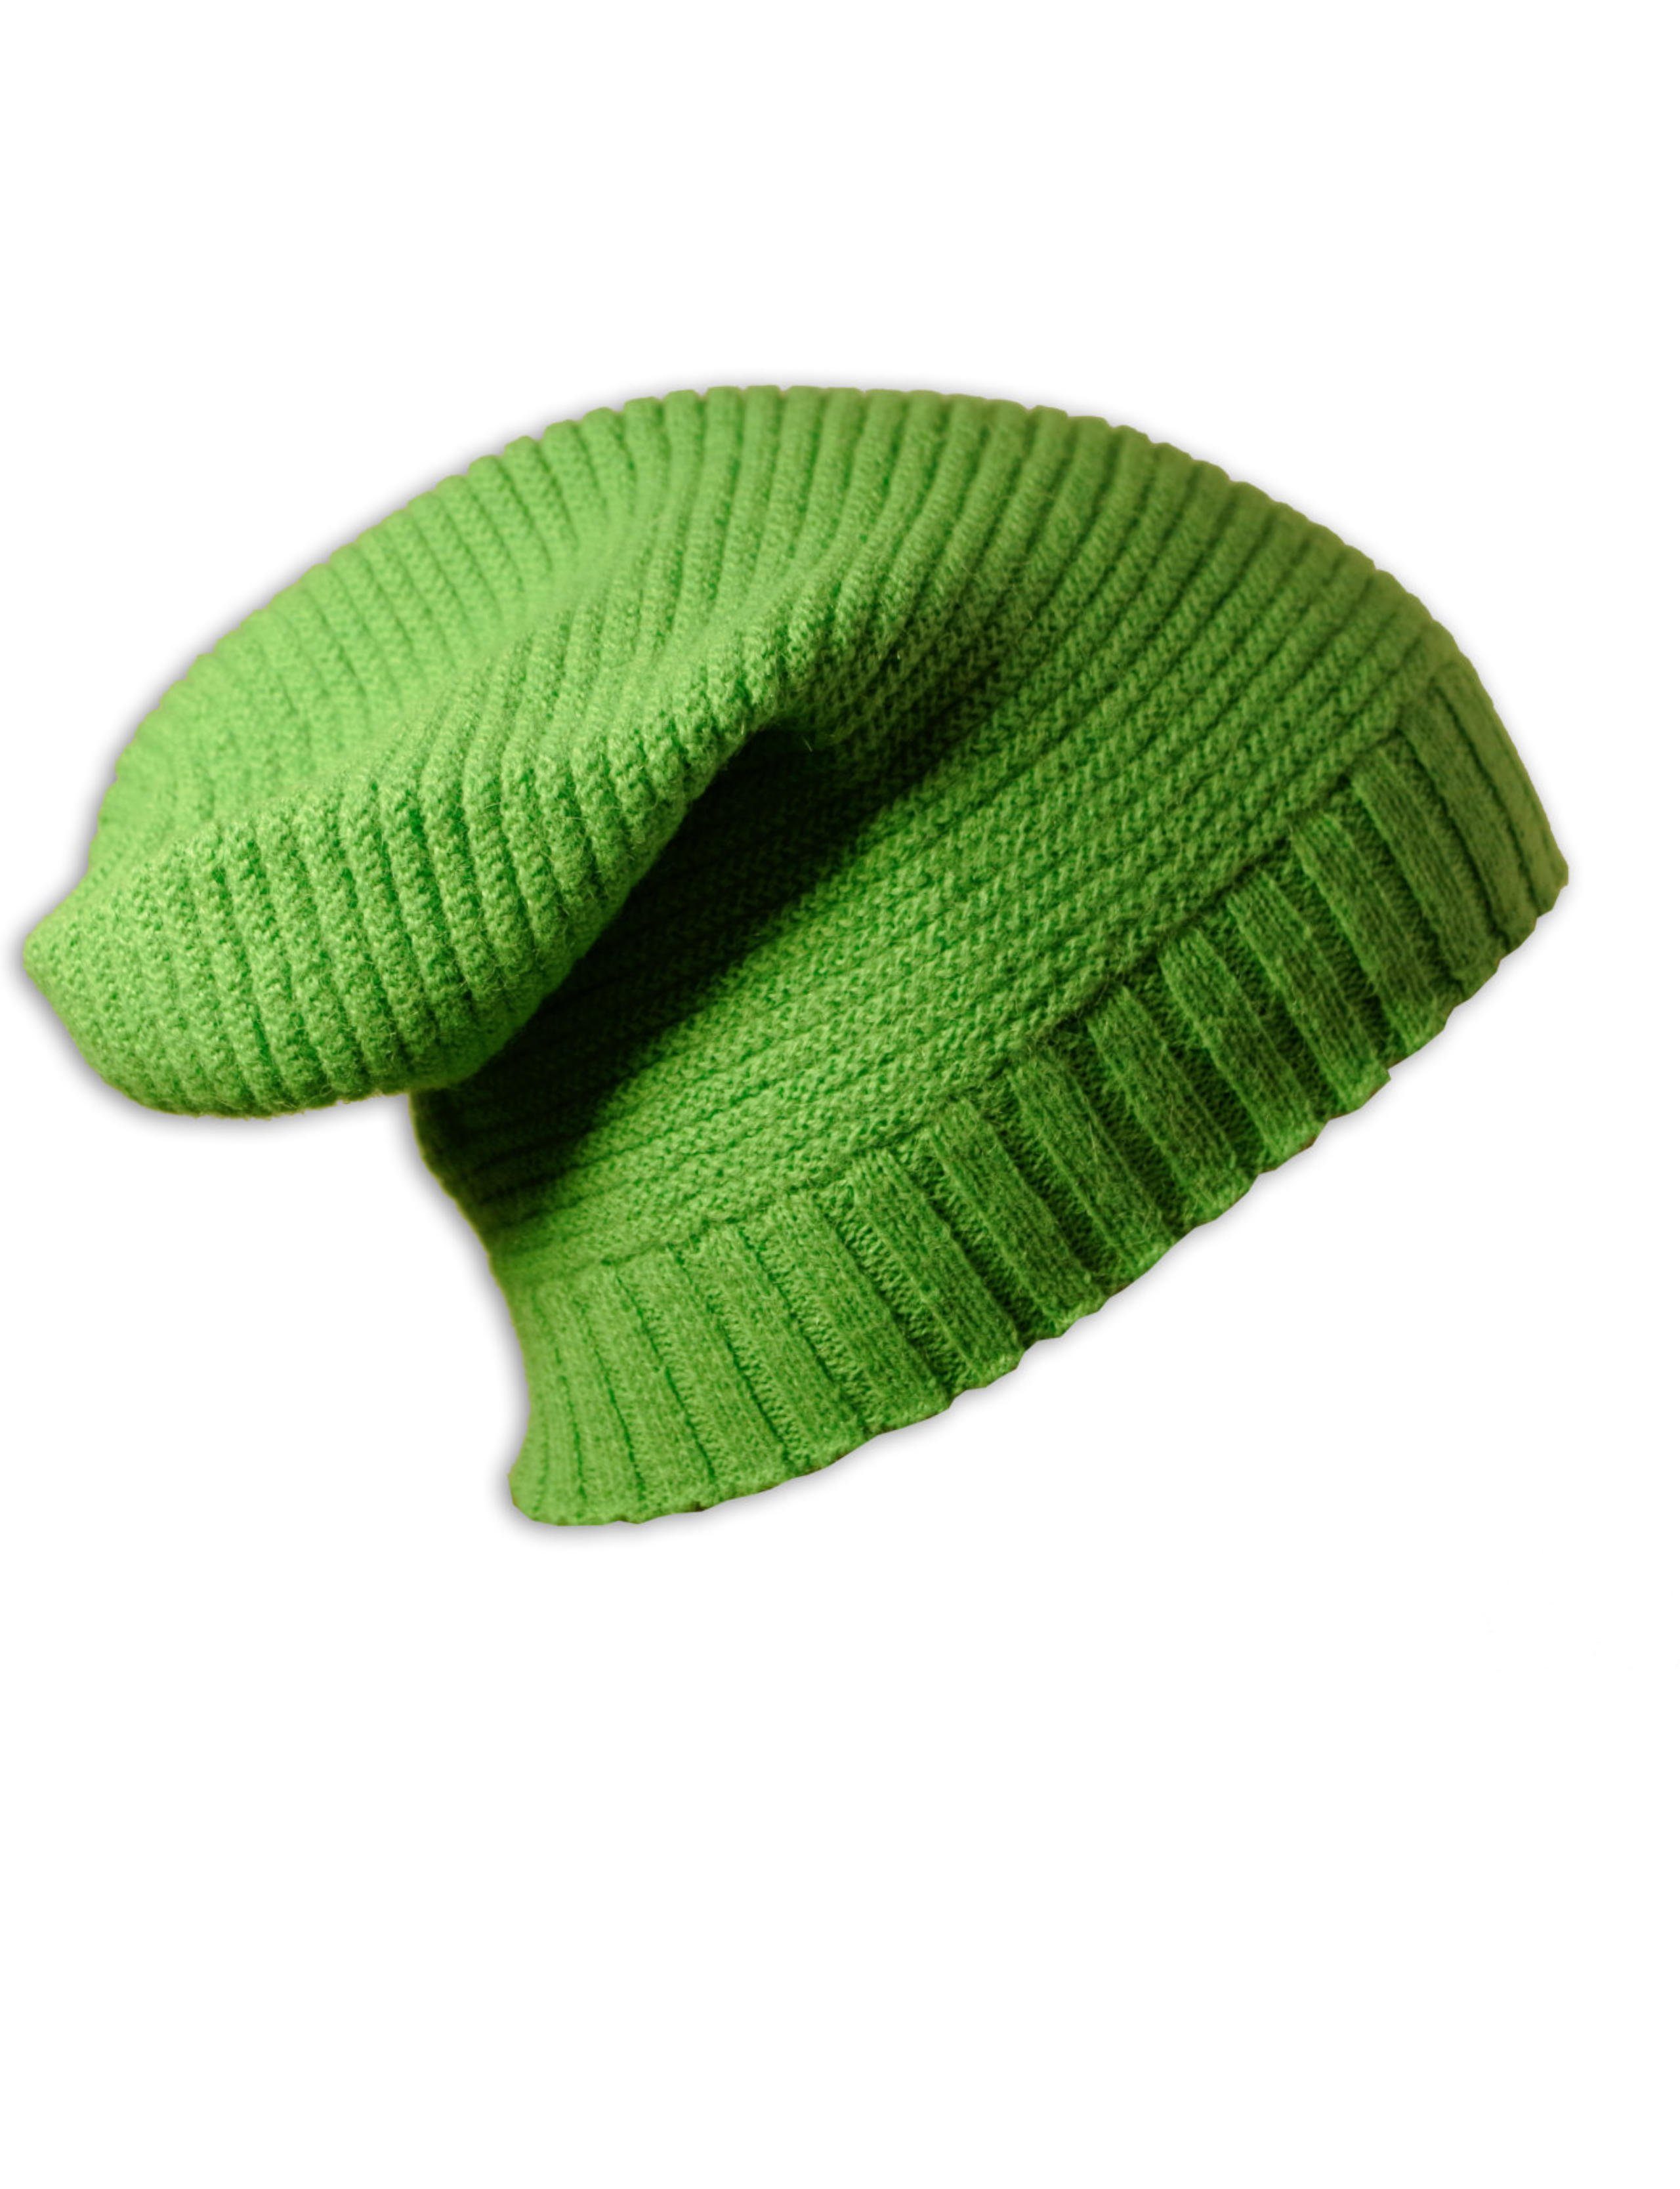 grün Mütze Posh Alpaka Alpakawolle 100% aus Allungantino Strickmütze Gear